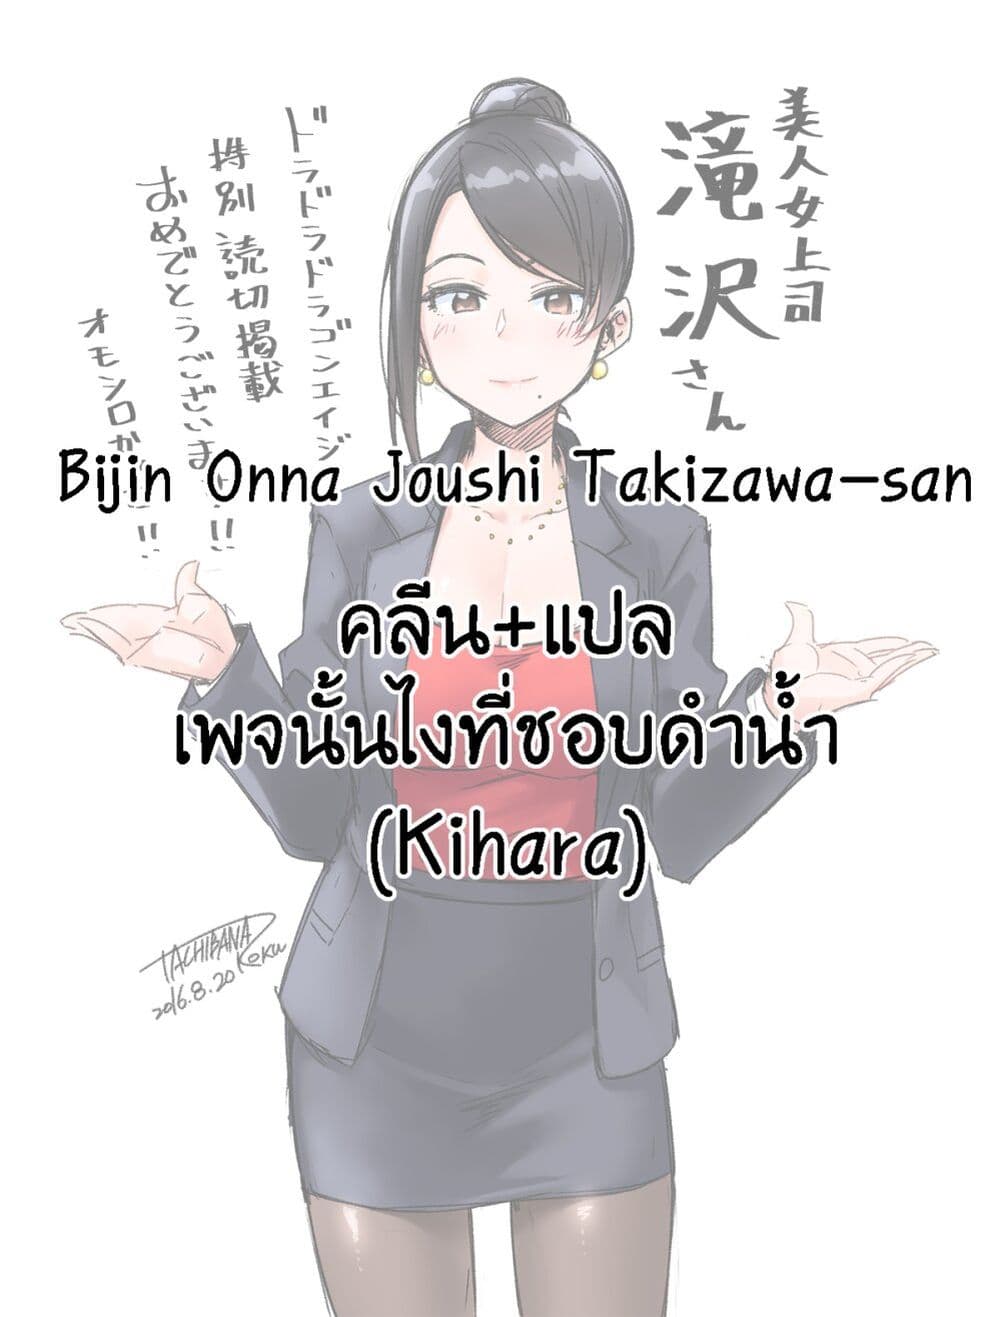 Bijin Onna Joushi Takizawa-san หัวหน้าสุดสวย ทากิซาวะซัง 2-2